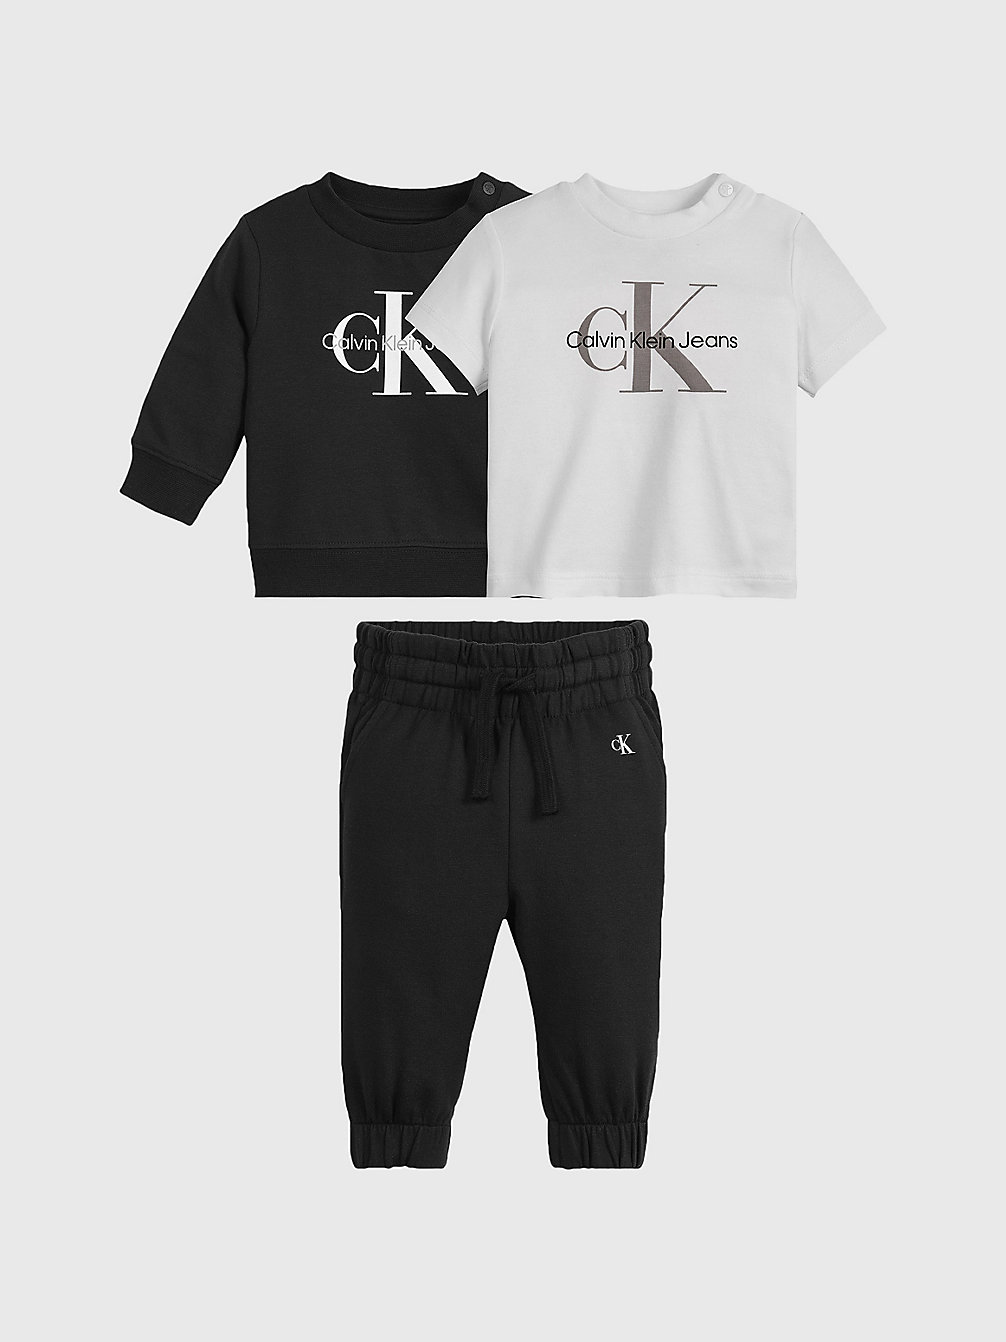 CK BLACK > Подарочный набор для новорожденного > undefined newborn - Calvin Klein